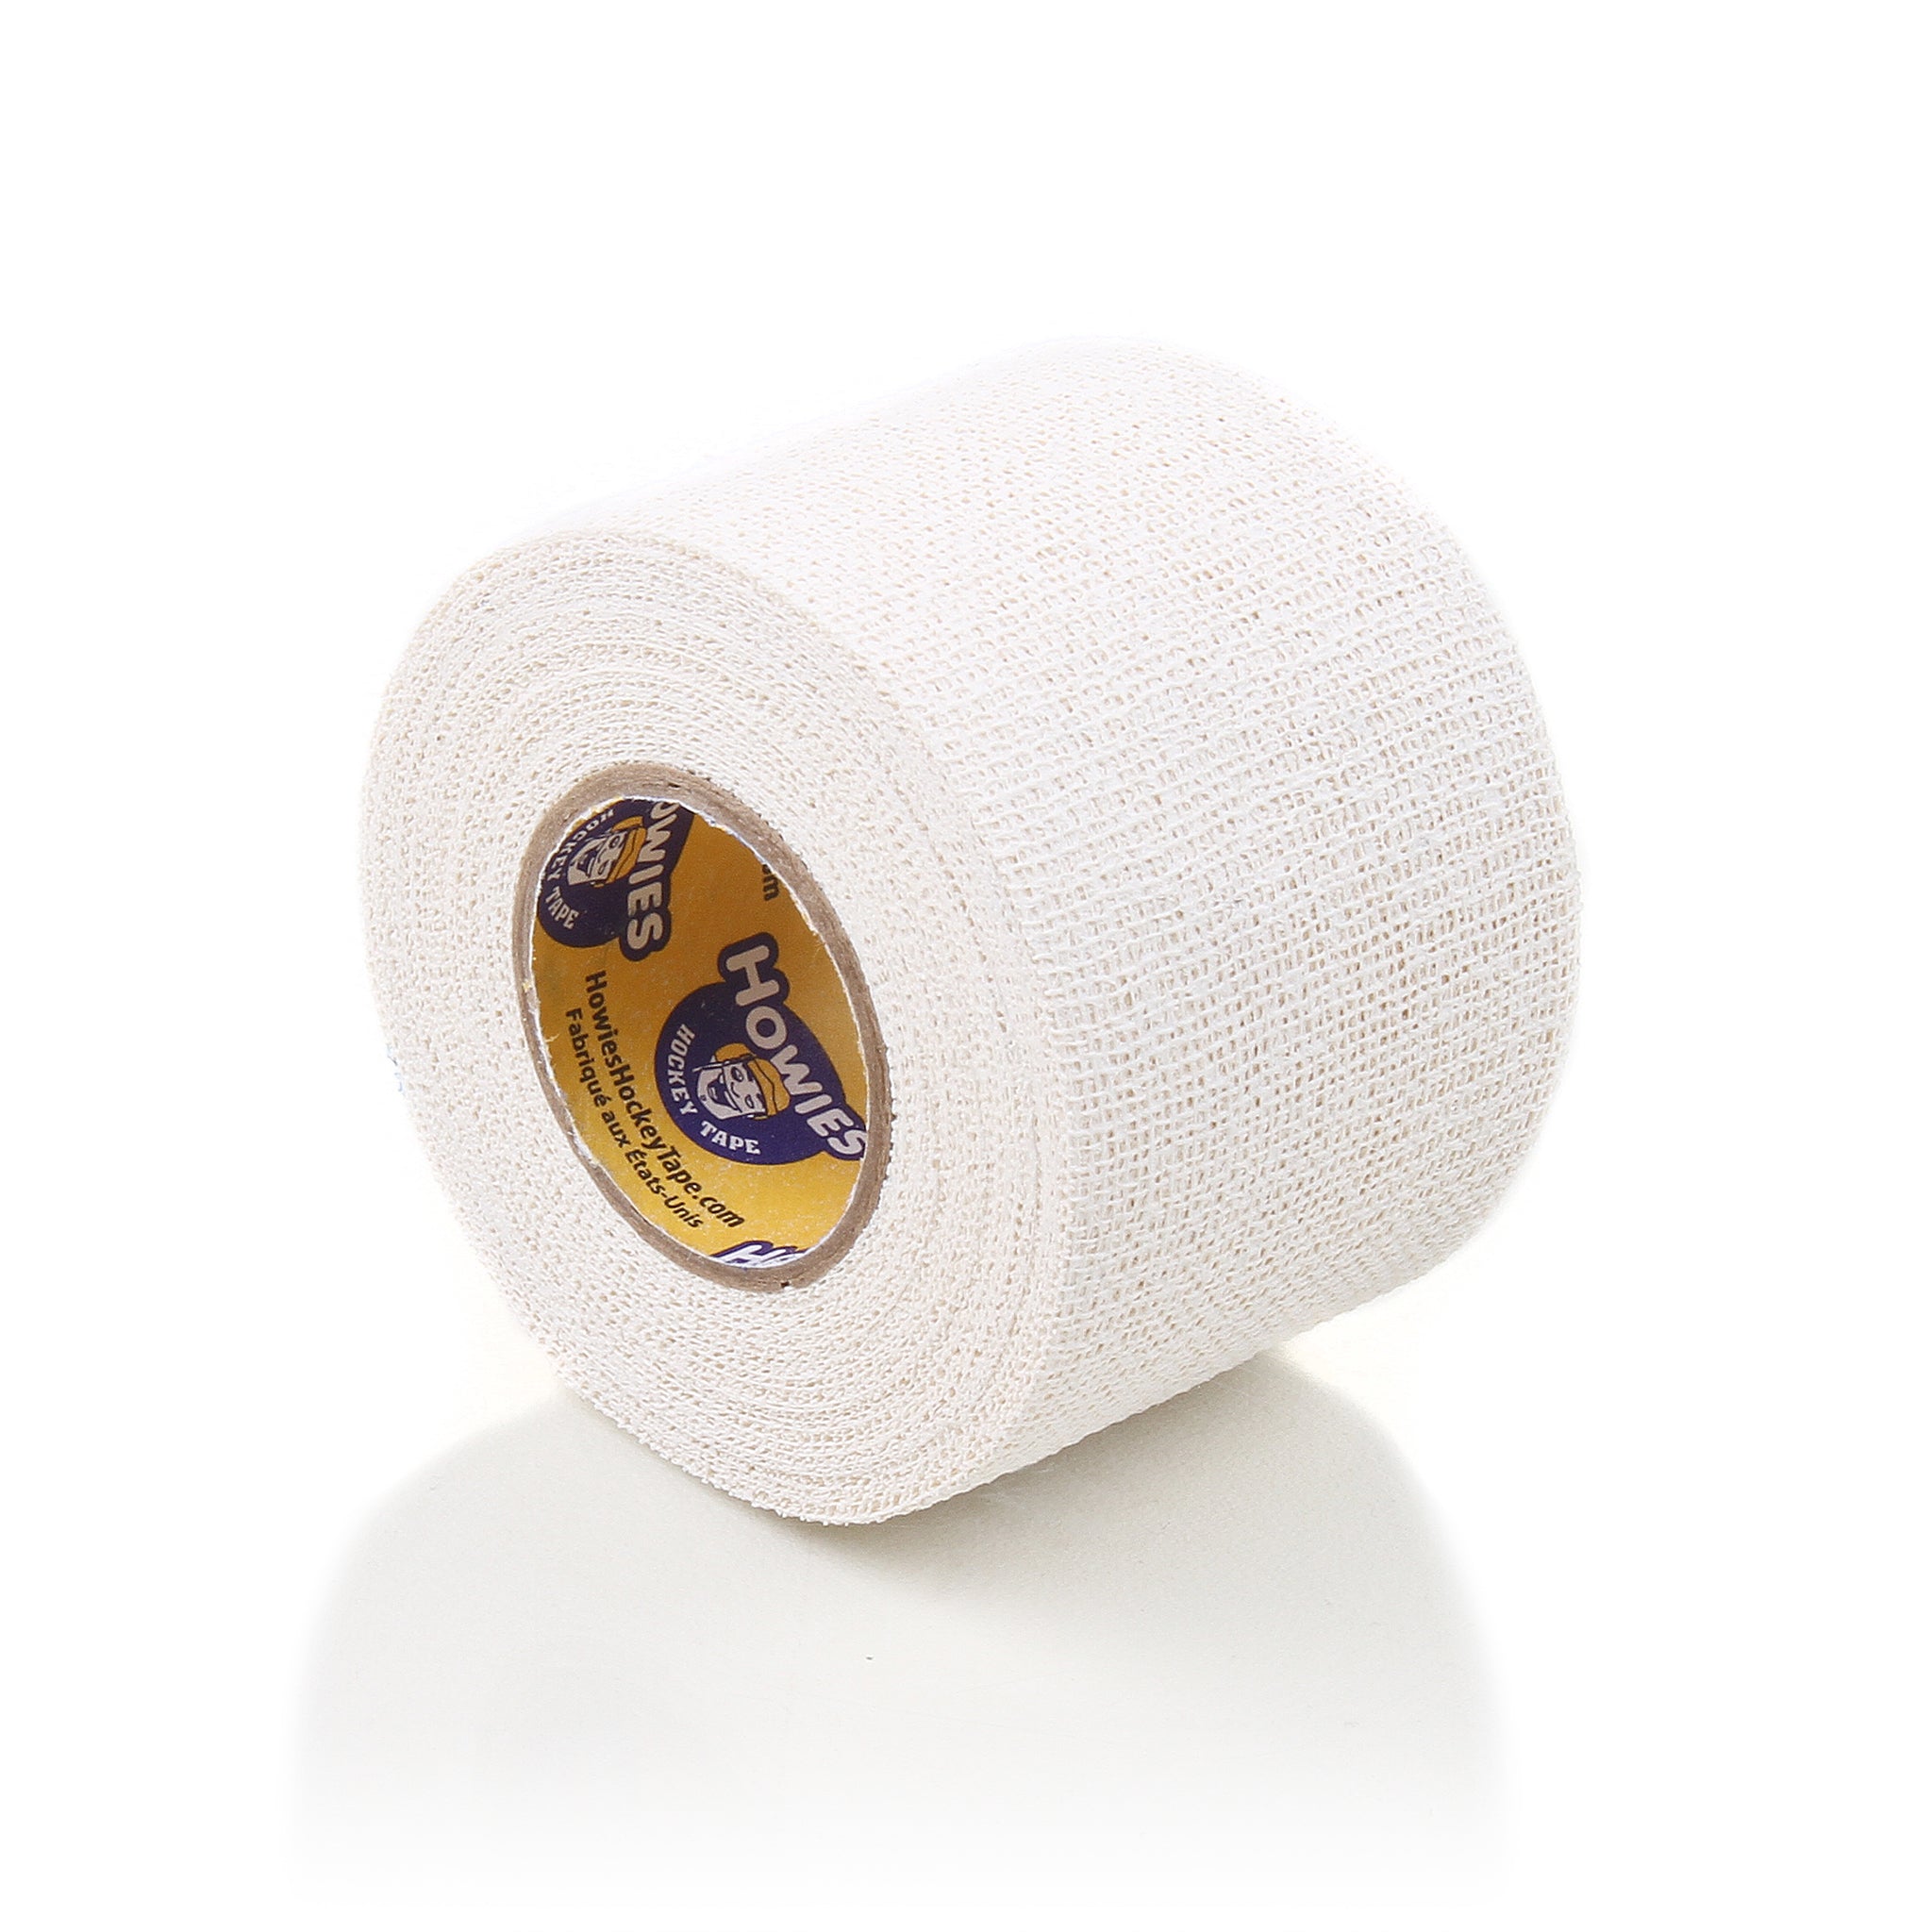 Howies Cloth Hockey Tape White